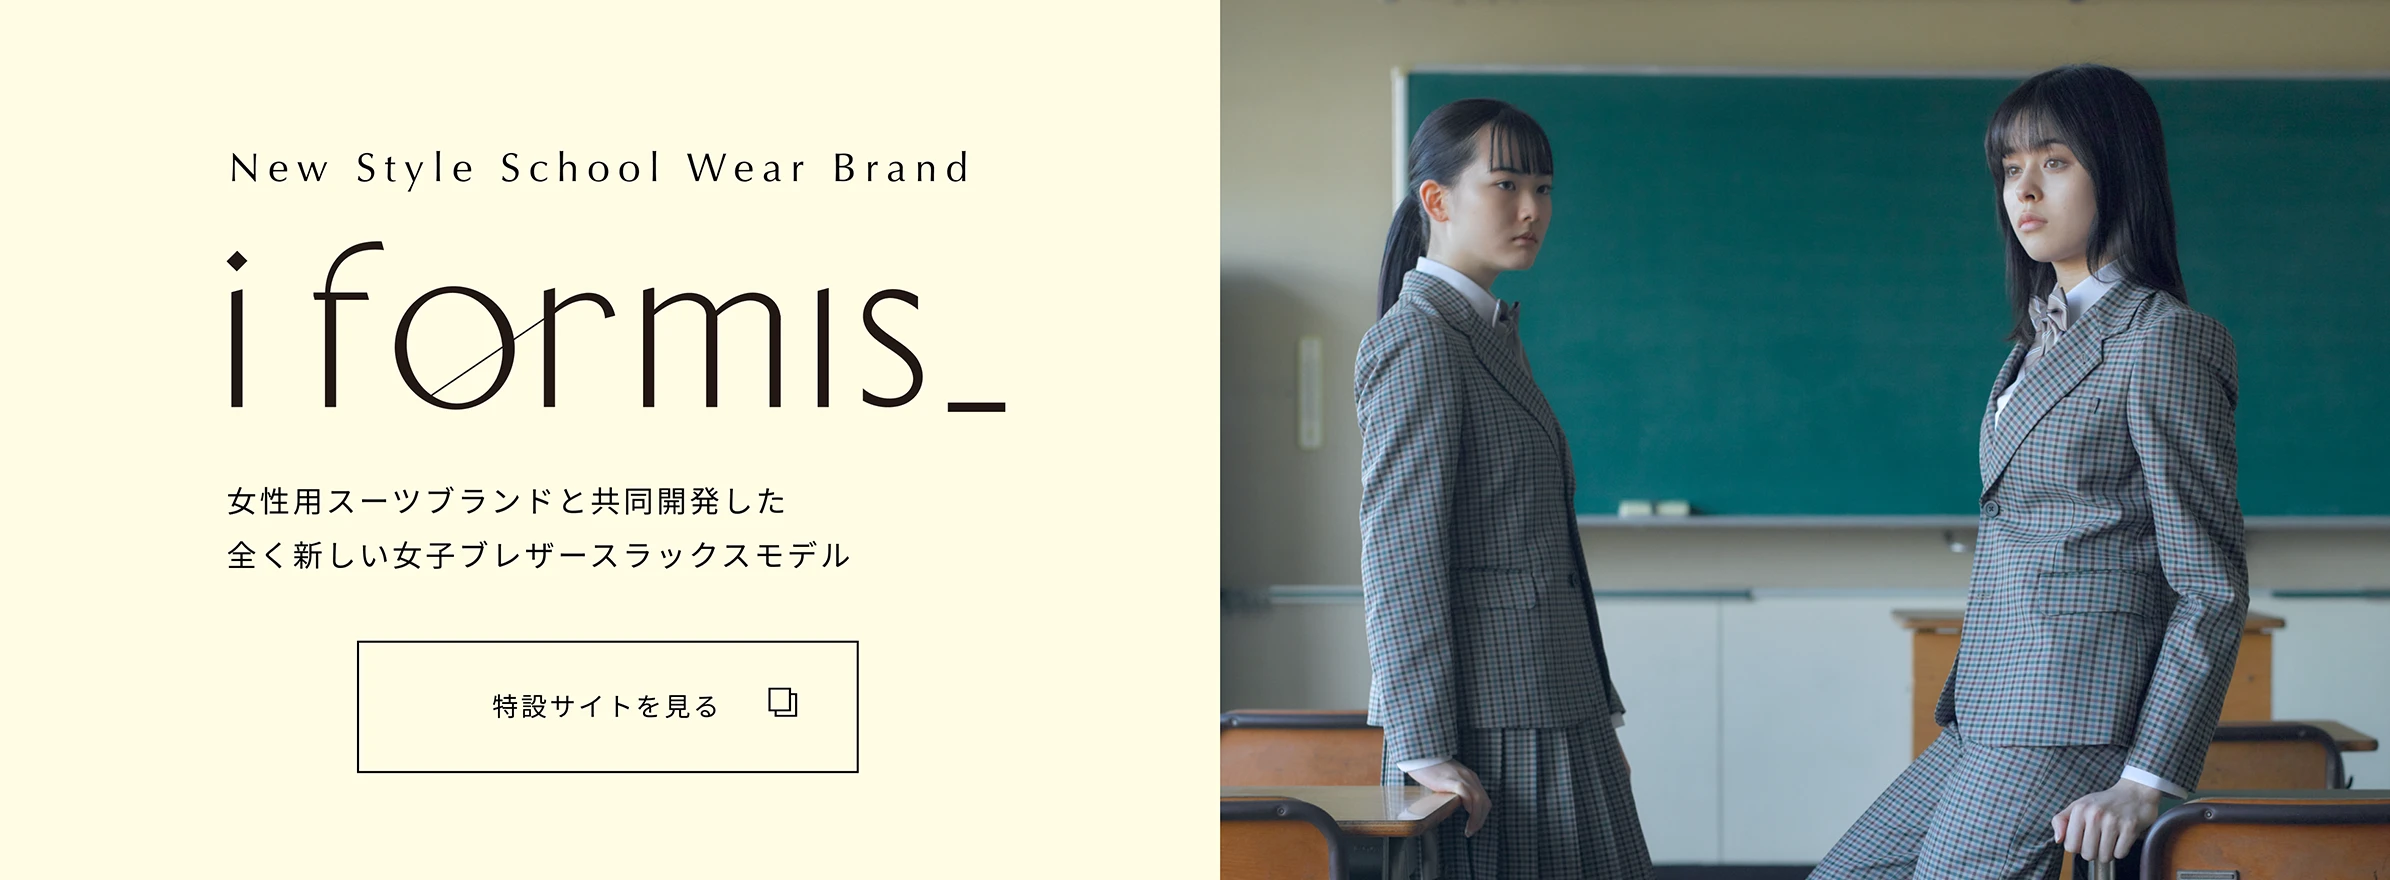 New Style School Wear Brand 「i formis_」 女性用スーツブランドと共同開発した全く新しい女子ブレザースラックスモデル 特設サイトを見る